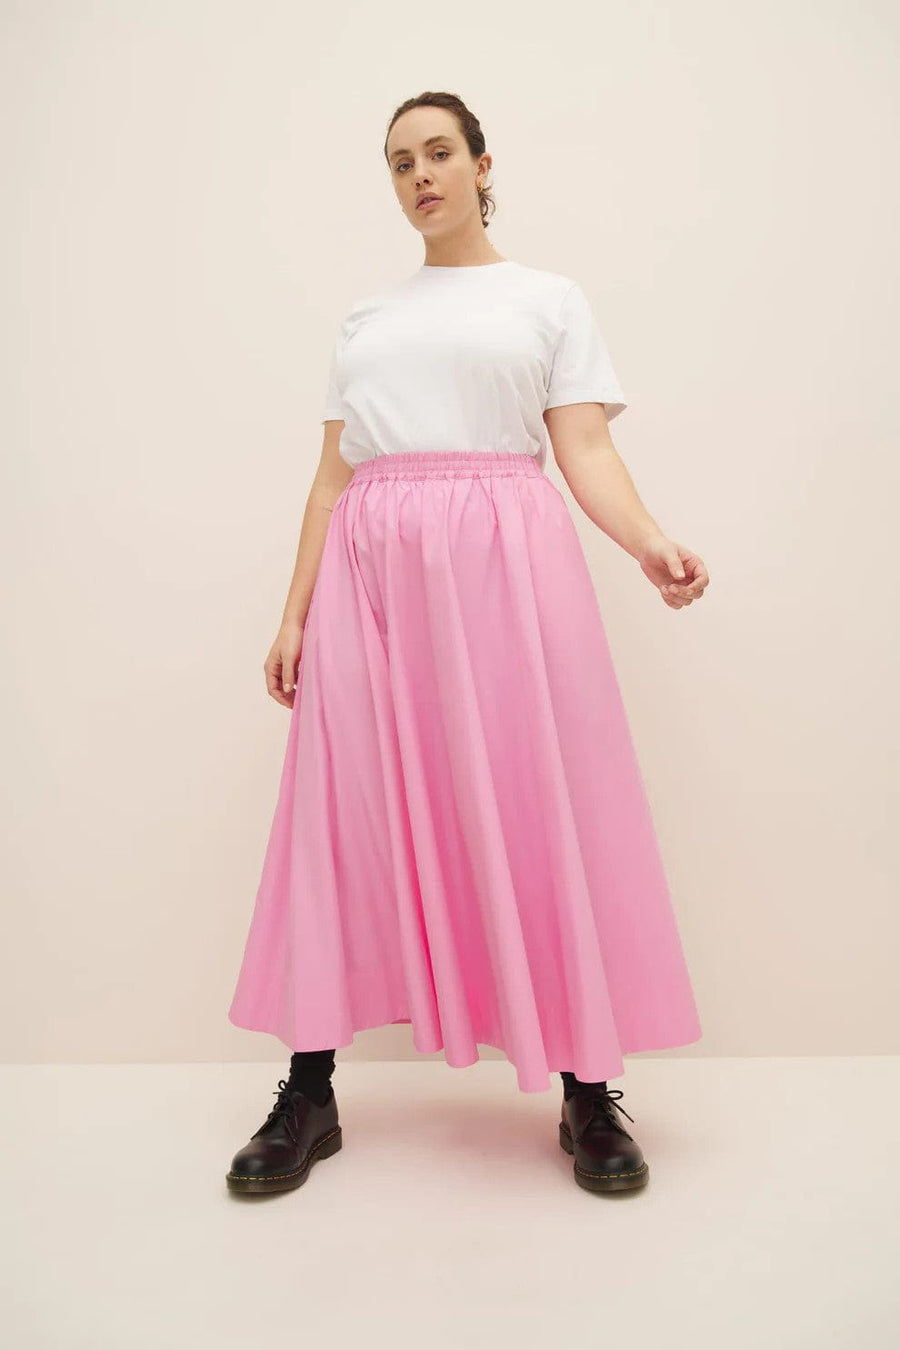 Moya Skirt Candy Pink